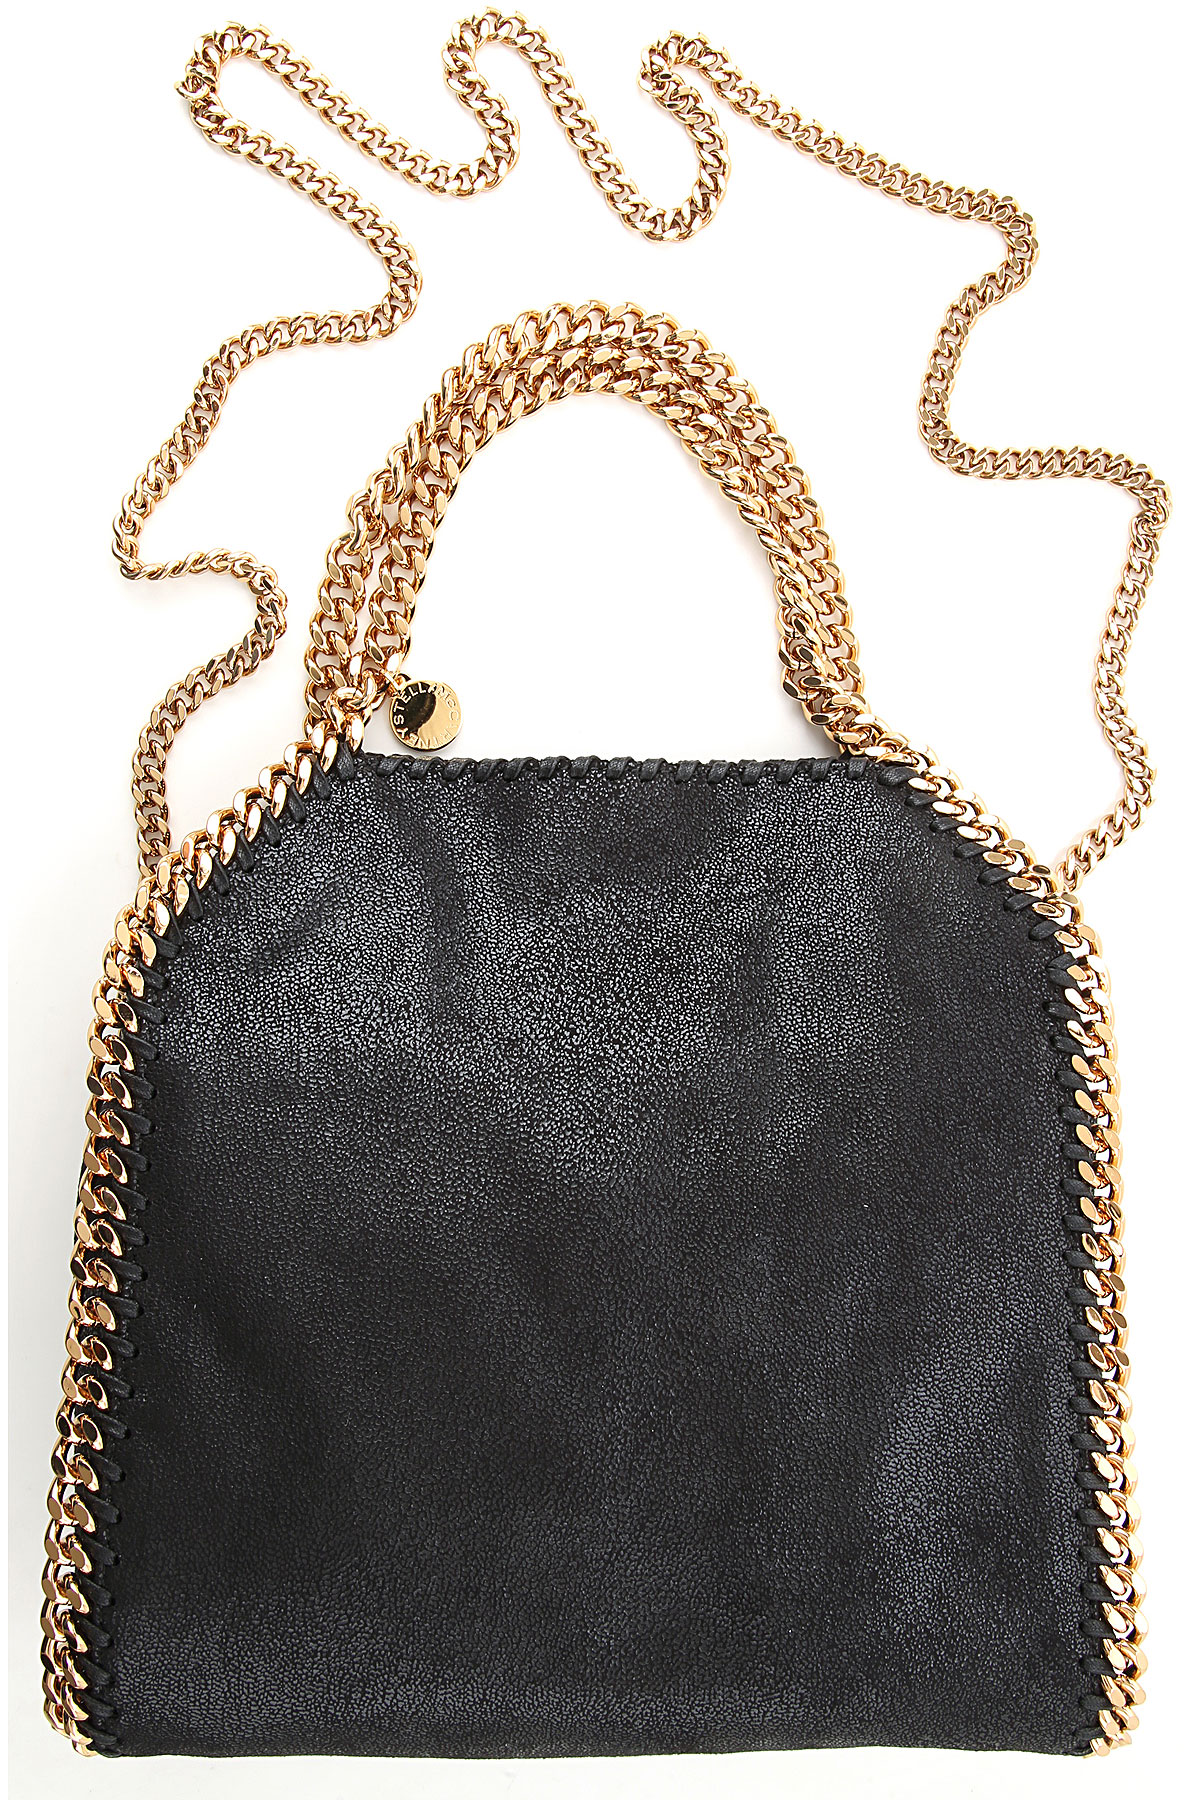 Handbags Stella McCartney, Style code: 371223-w9355-1000